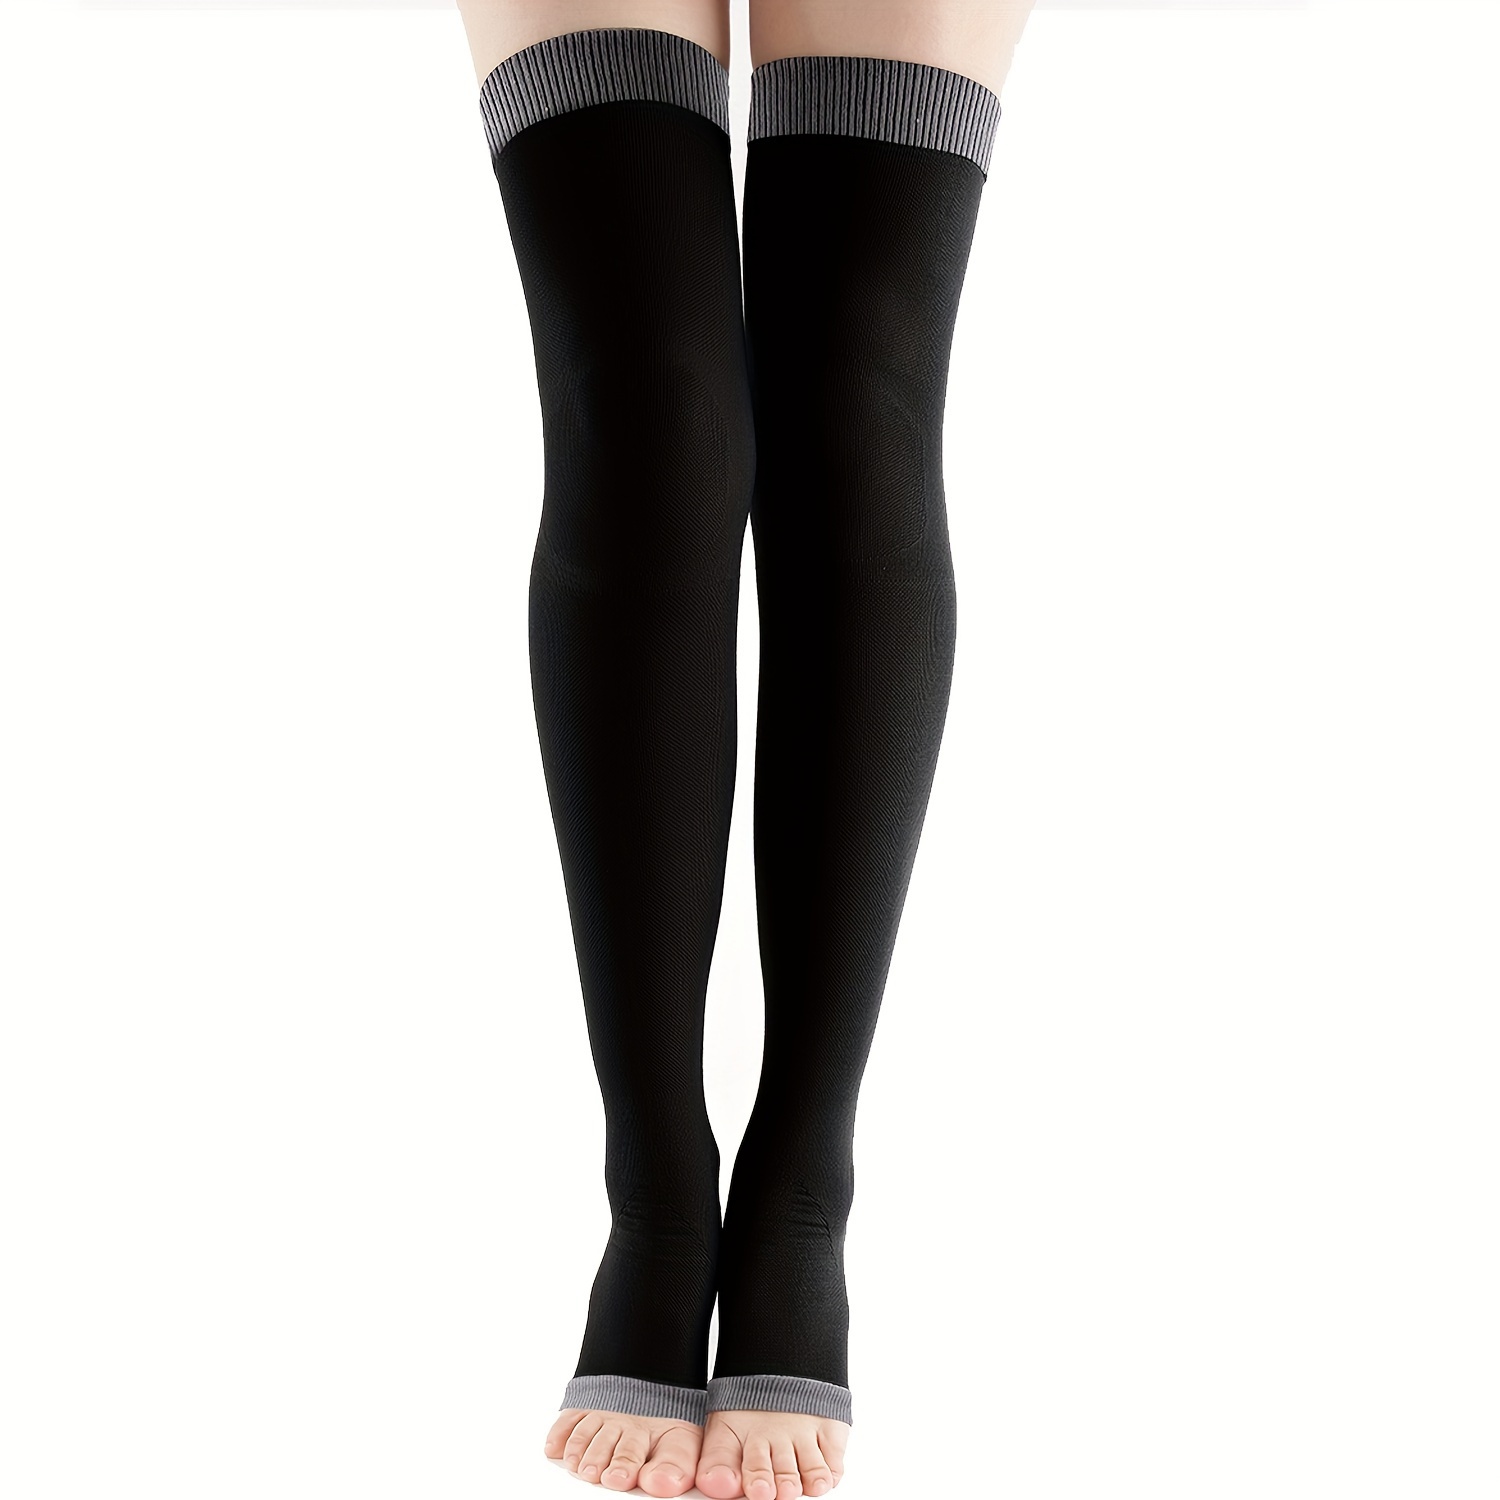 LYUMO Elastic Compression Stockings Varicose Veins Stockings Leg